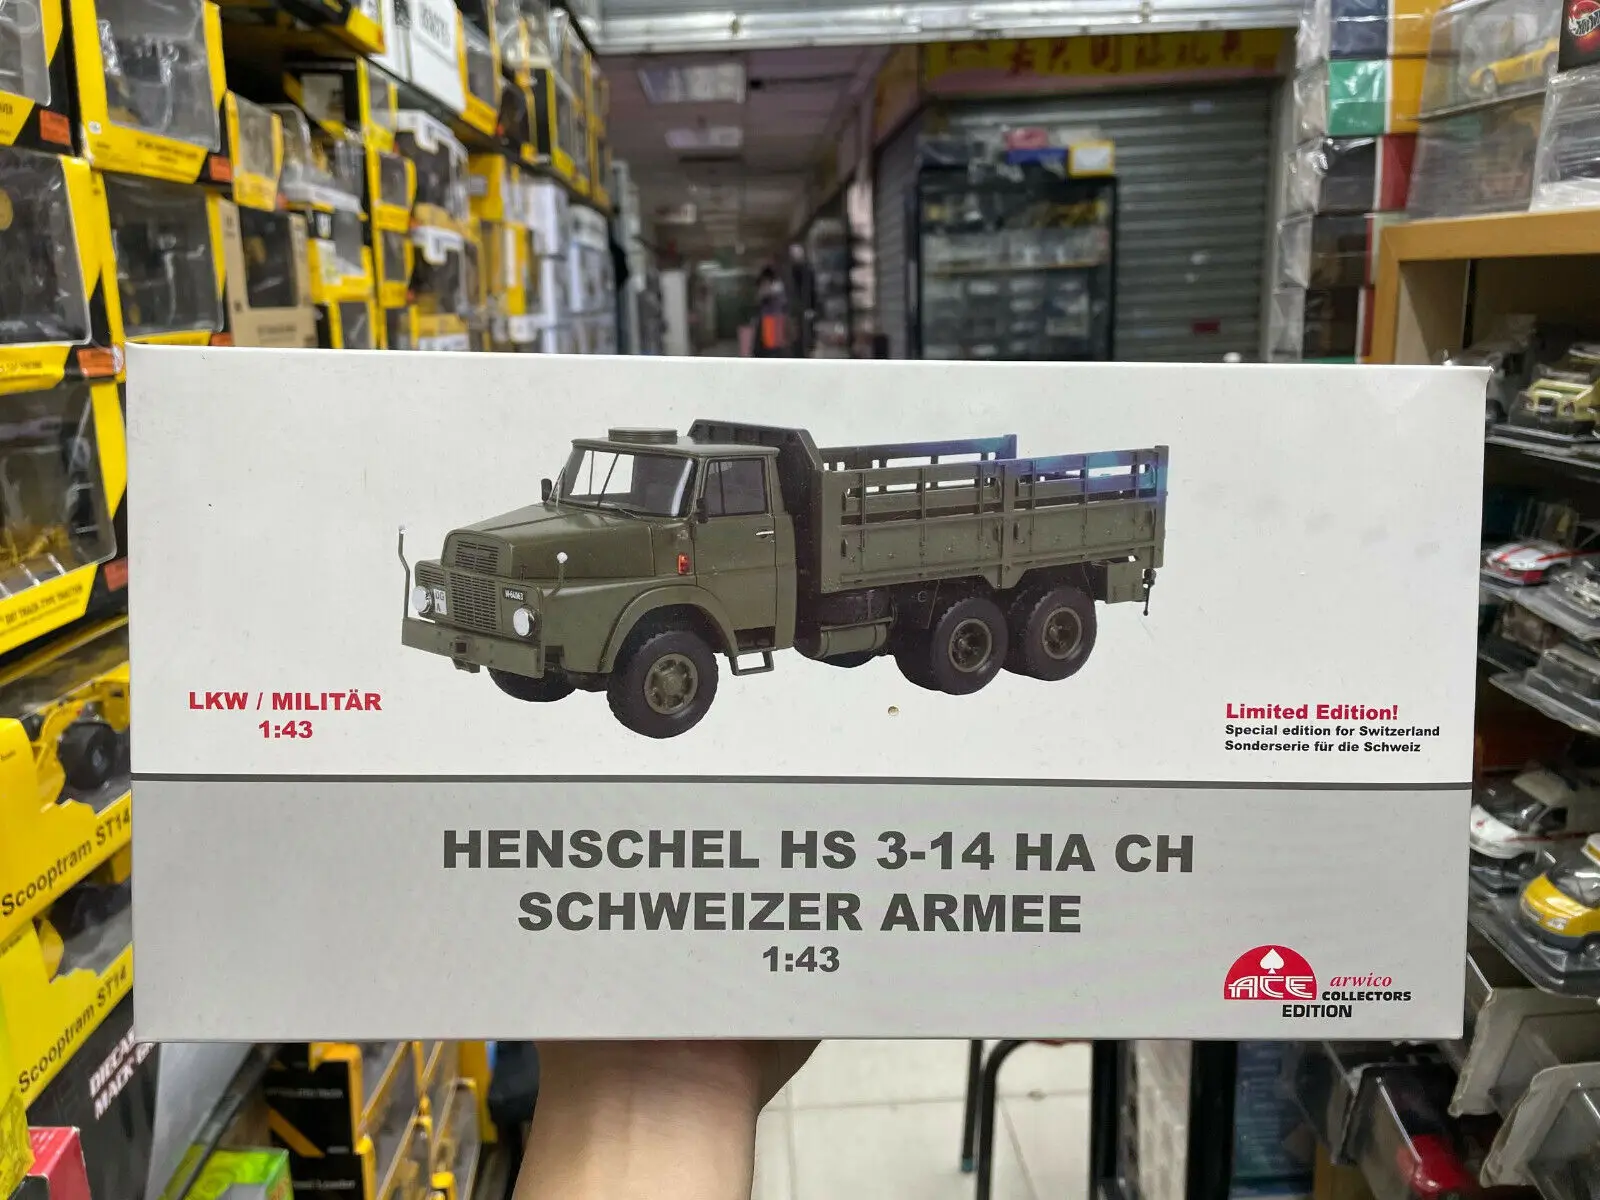 

ACE Arwico Henschel HS 3-14 HA CH Schweizer Armee 1/43 Scale LKW/Militar Resin Truck Model